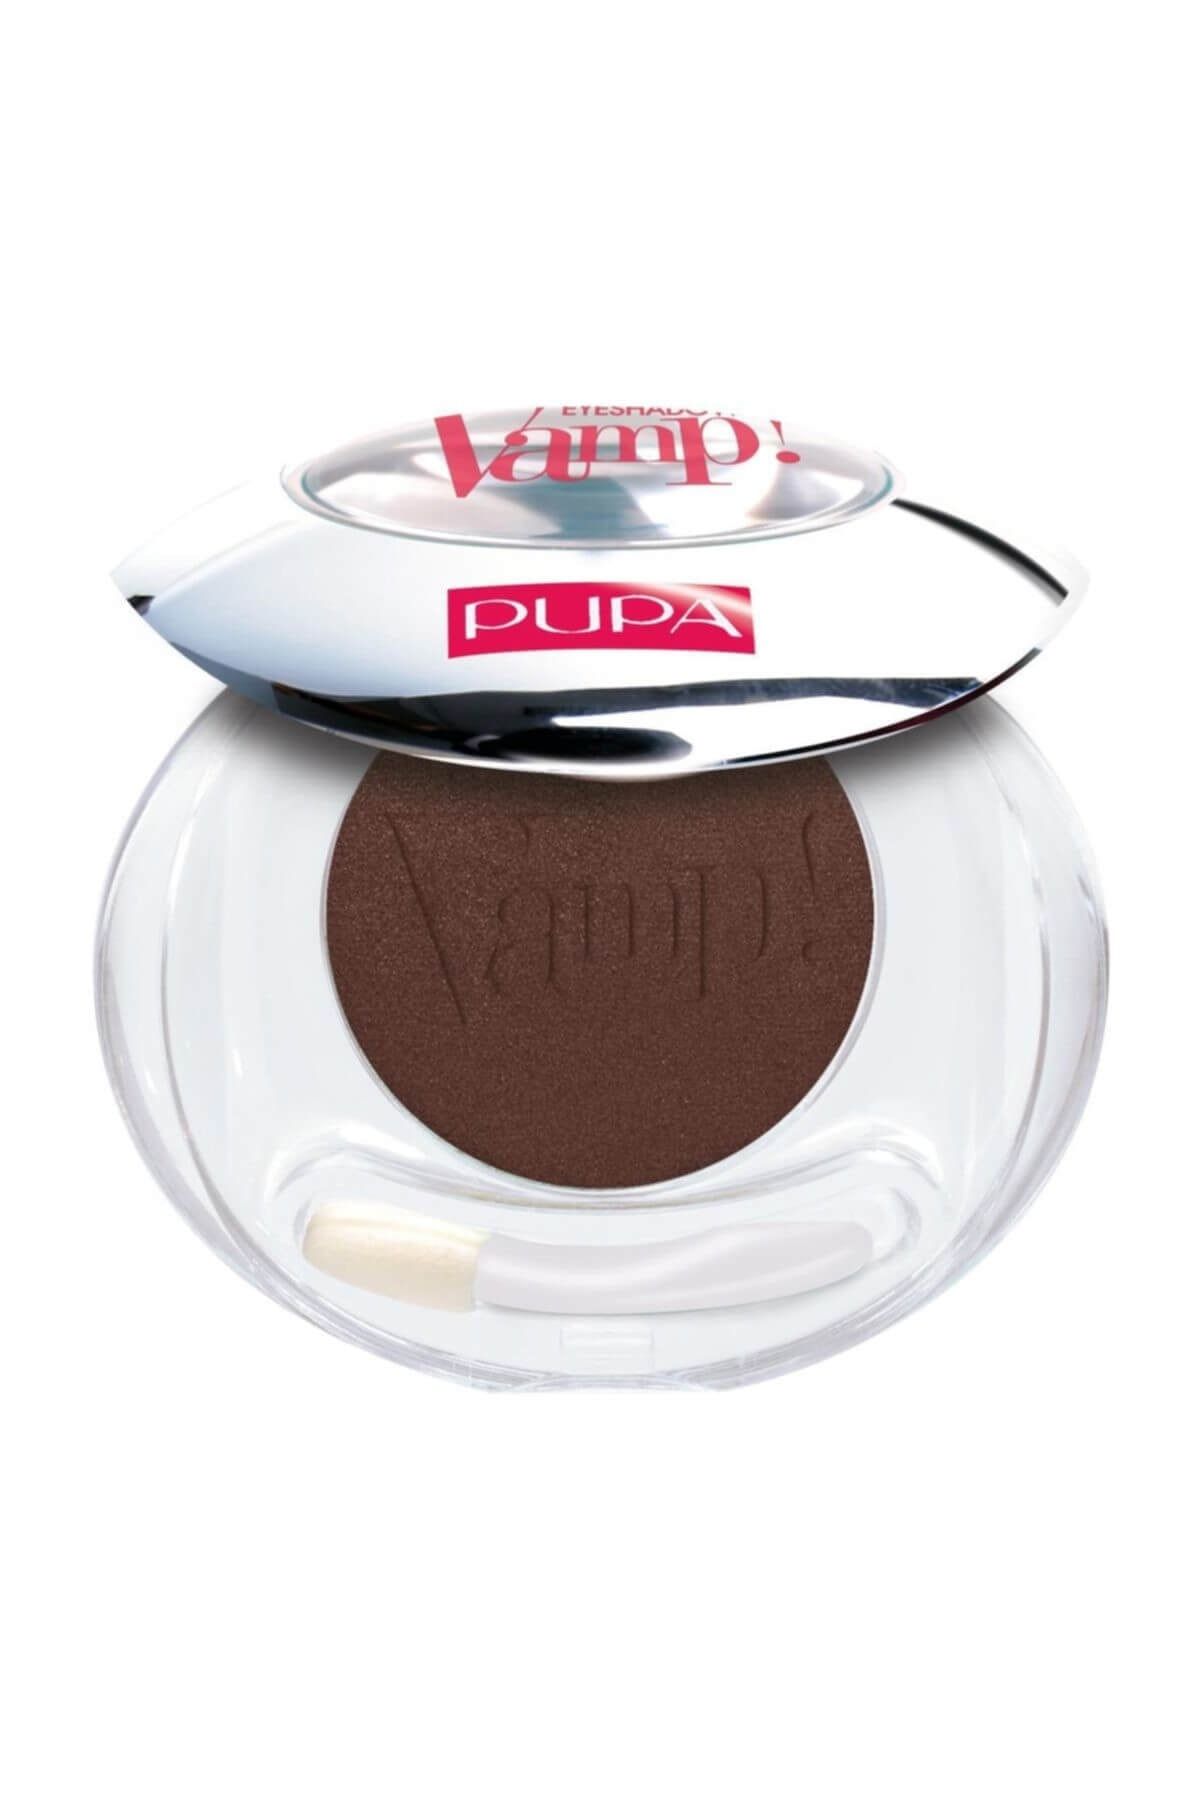 Pupa Milano Göz Farı - Vamp! Compact Eyeshadow 105 Chocolate 8011607203406